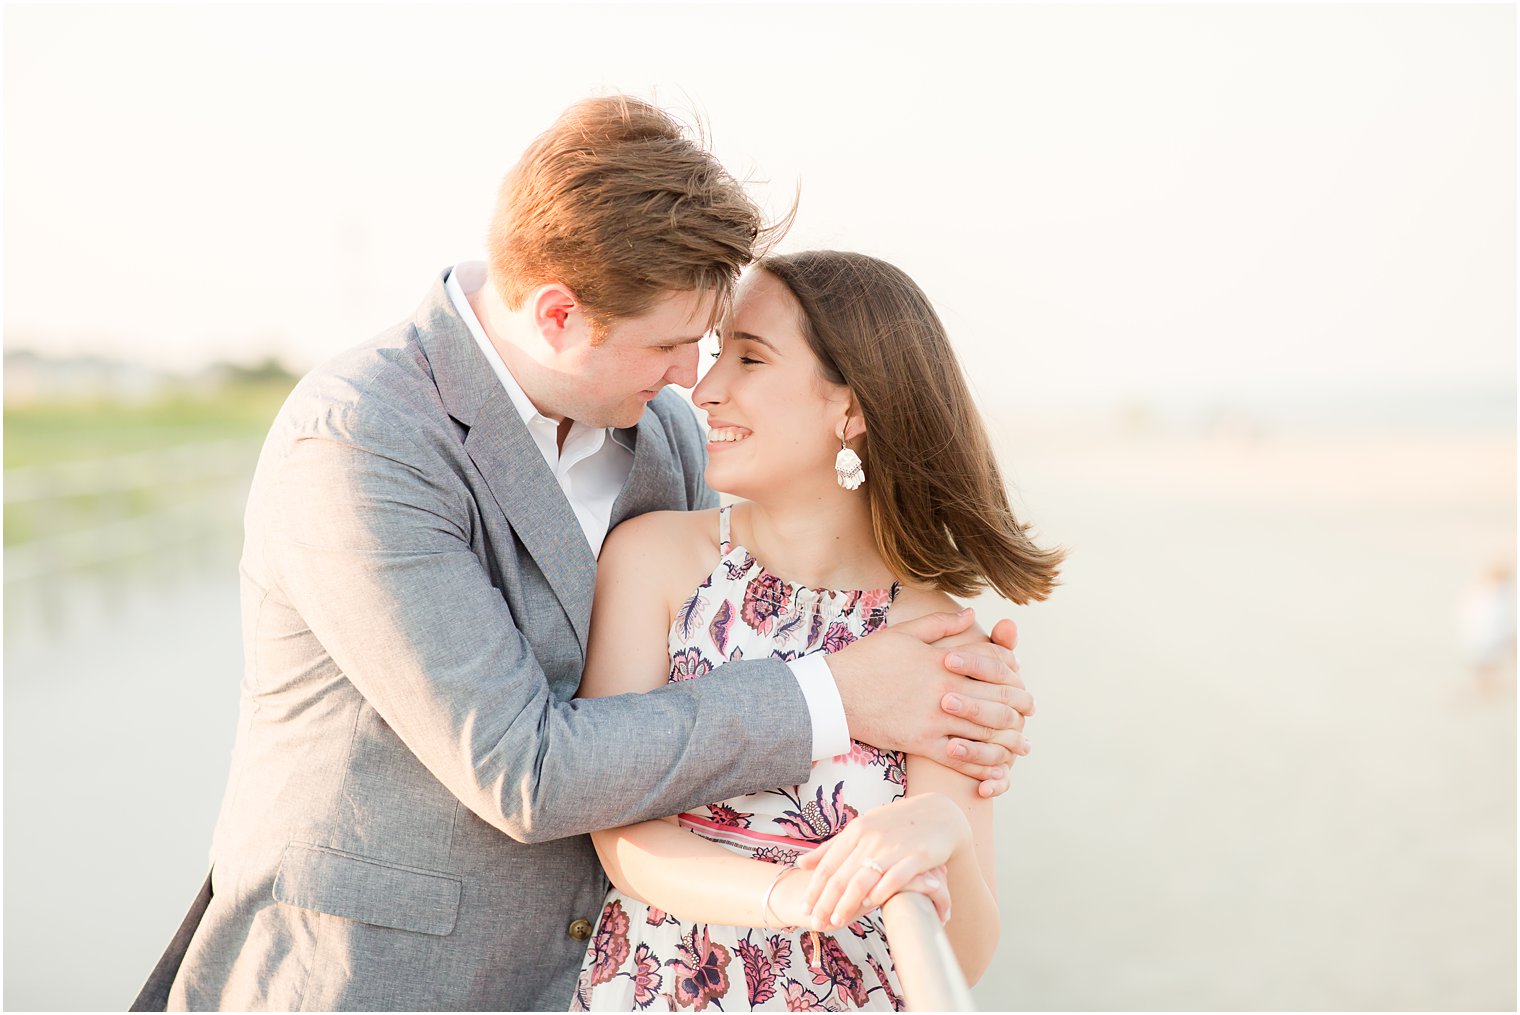 Romantic boardwalk engagement photos of groom hugging bride